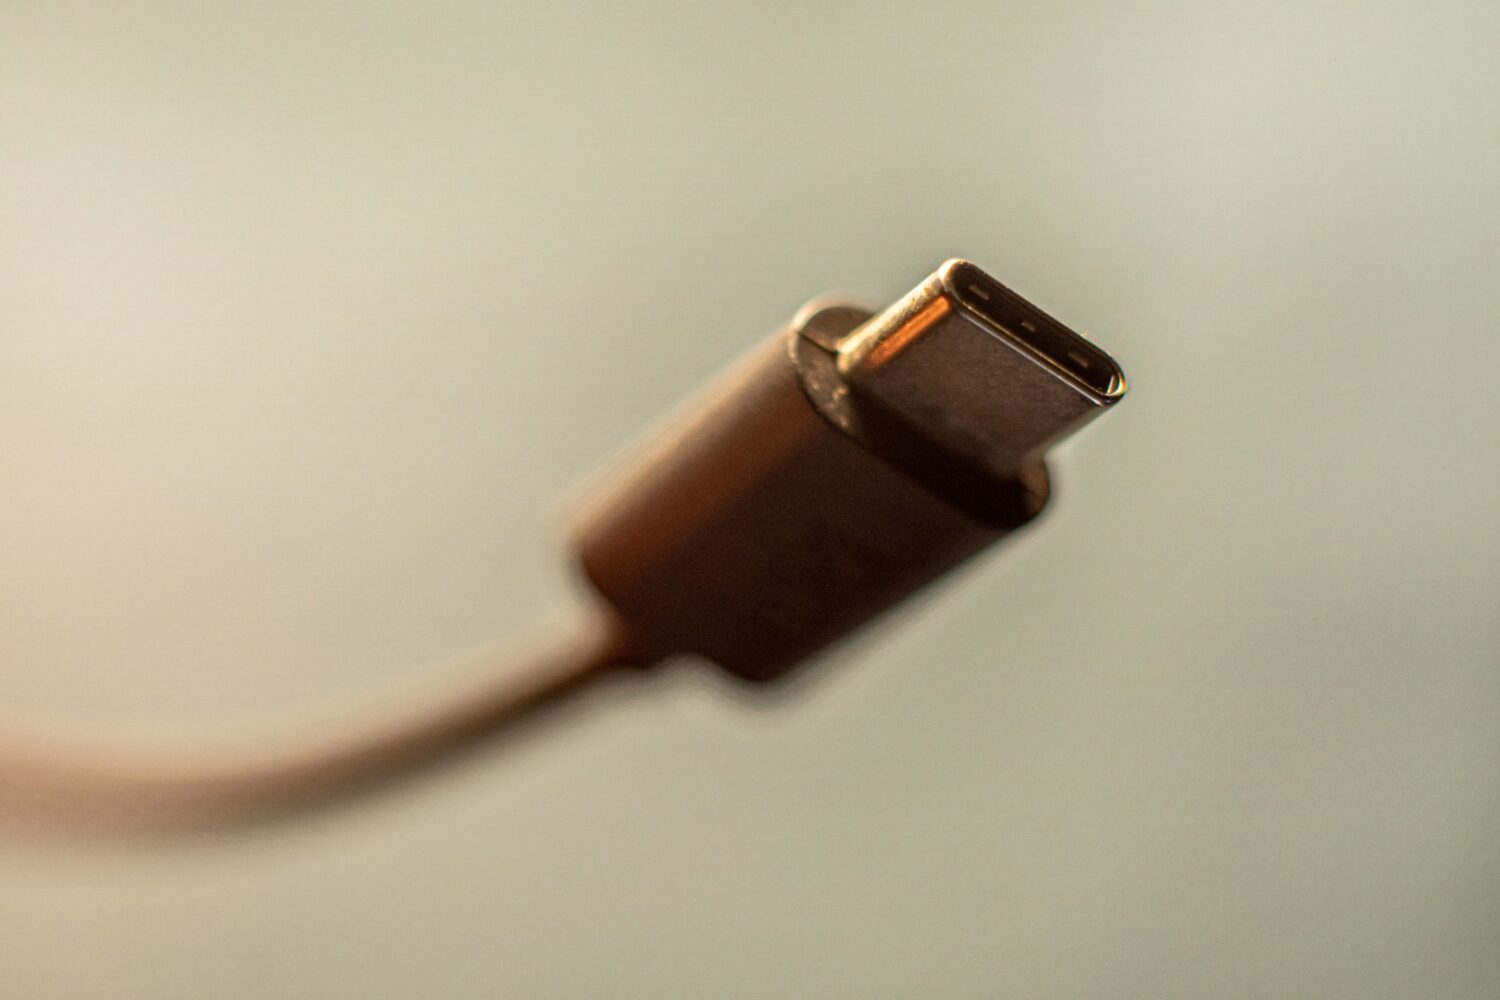 Closeup of a Thunderbolt/USB4 male socket